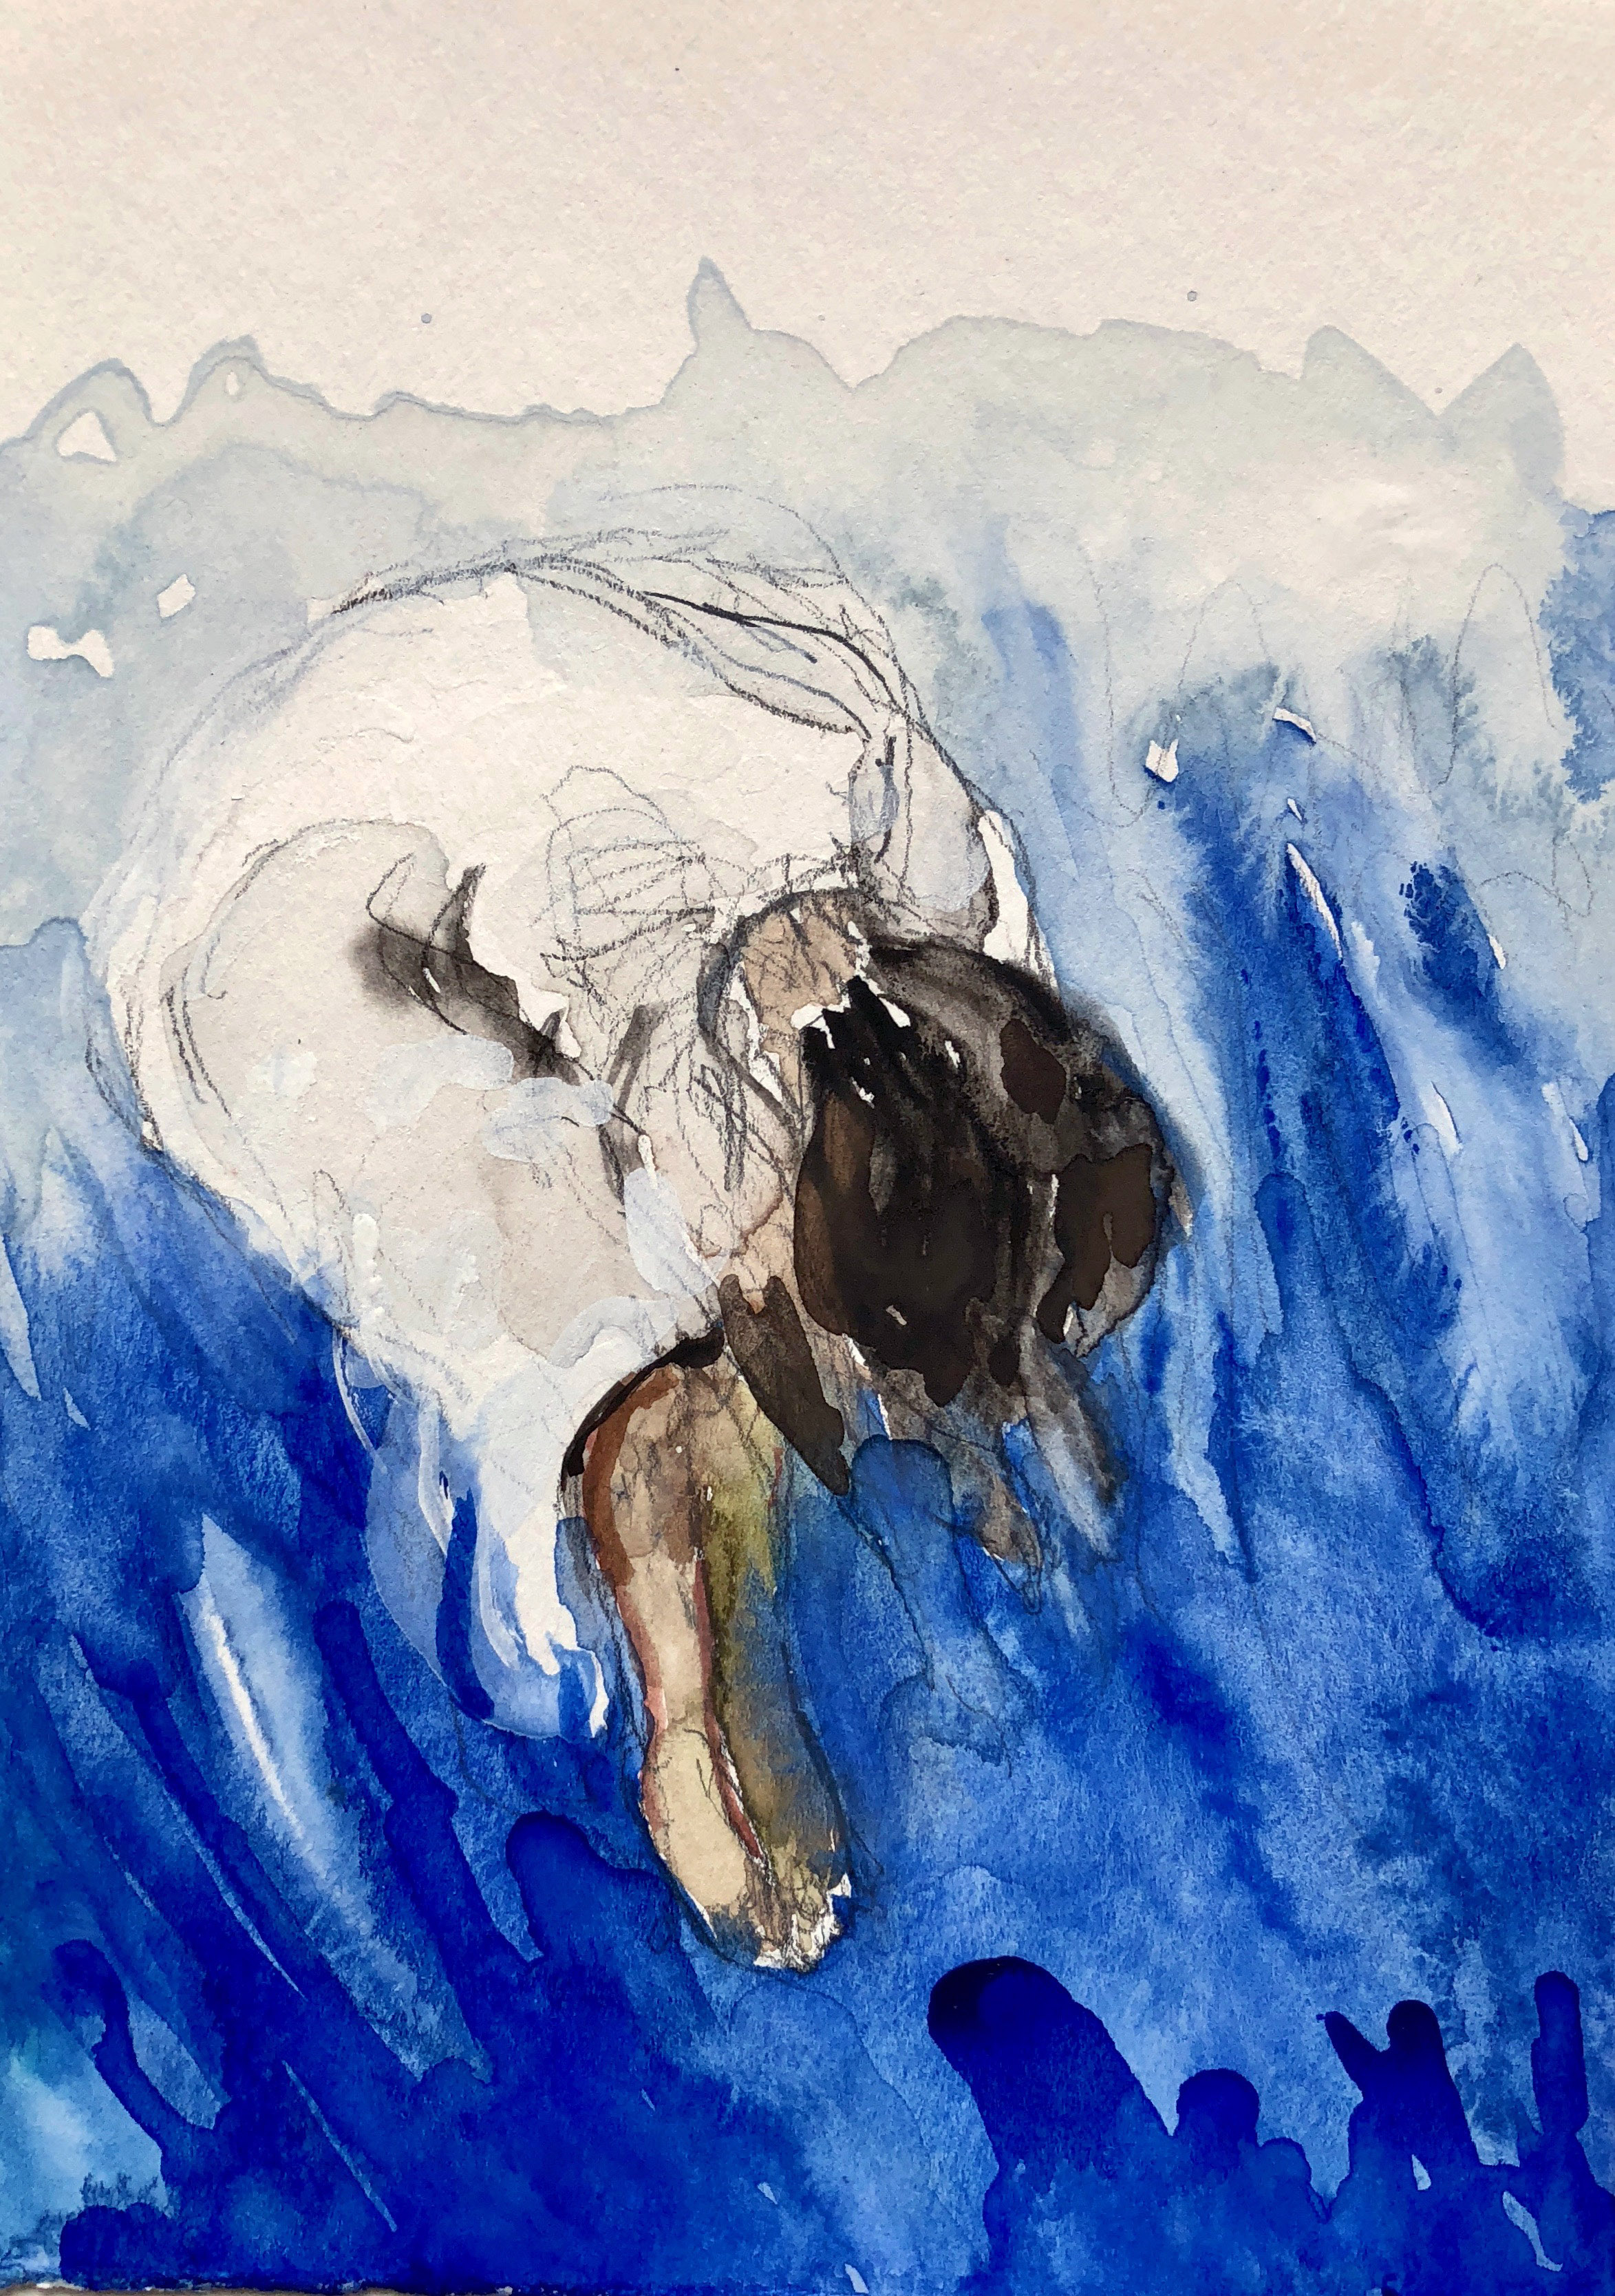 Soñador de Onda (Wave Dreamer), 2018,  Graphite and watercolor on paper, 7 1/2 x 5 in.